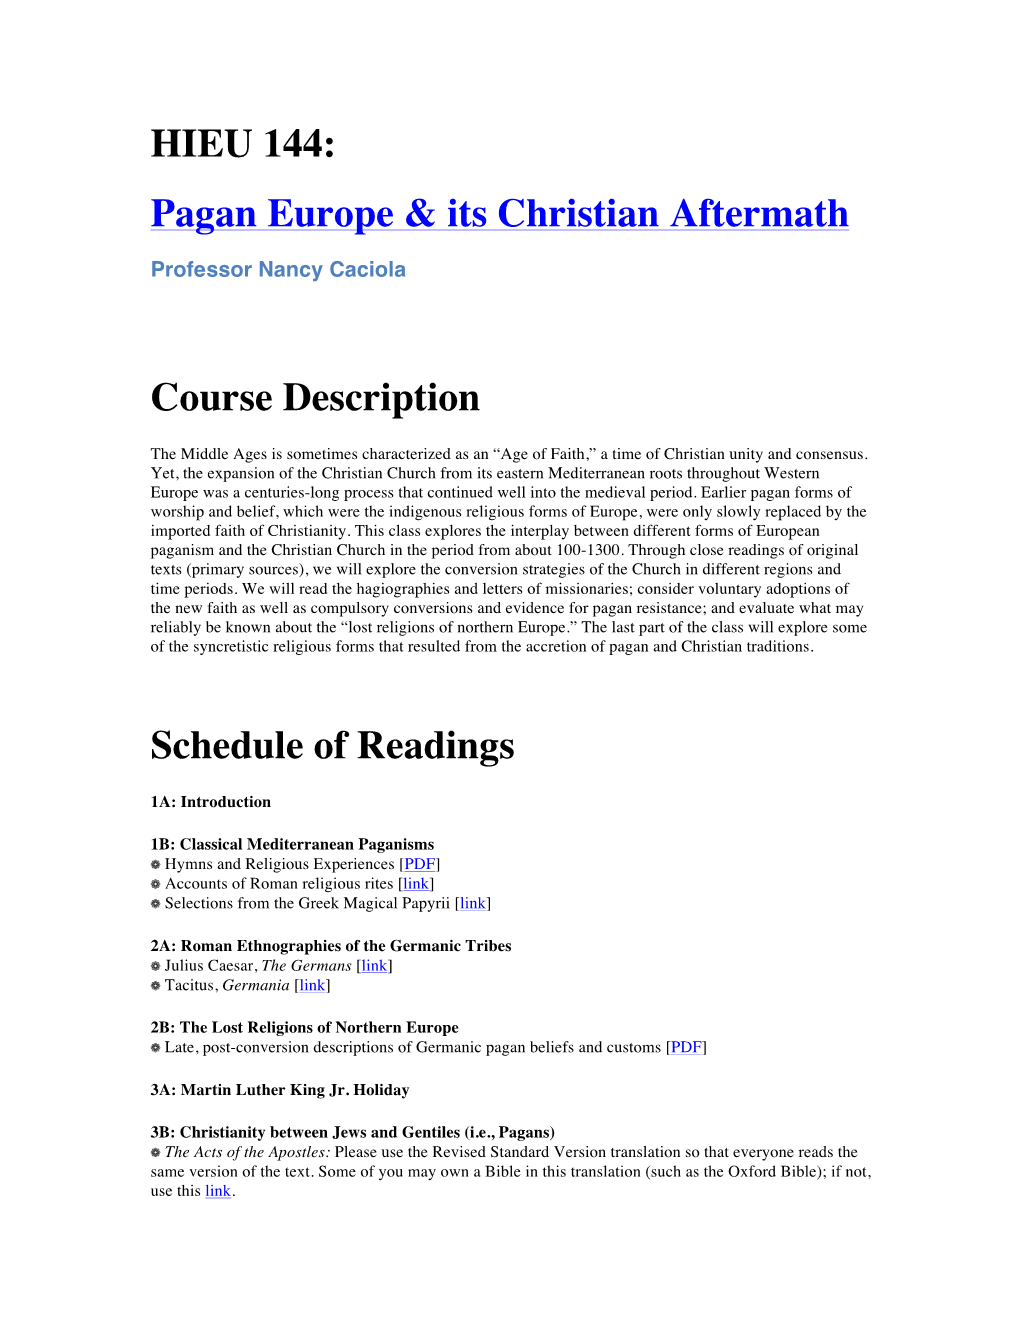 HIEU 144: Pagan Europe & Its Christian Aftermath Course